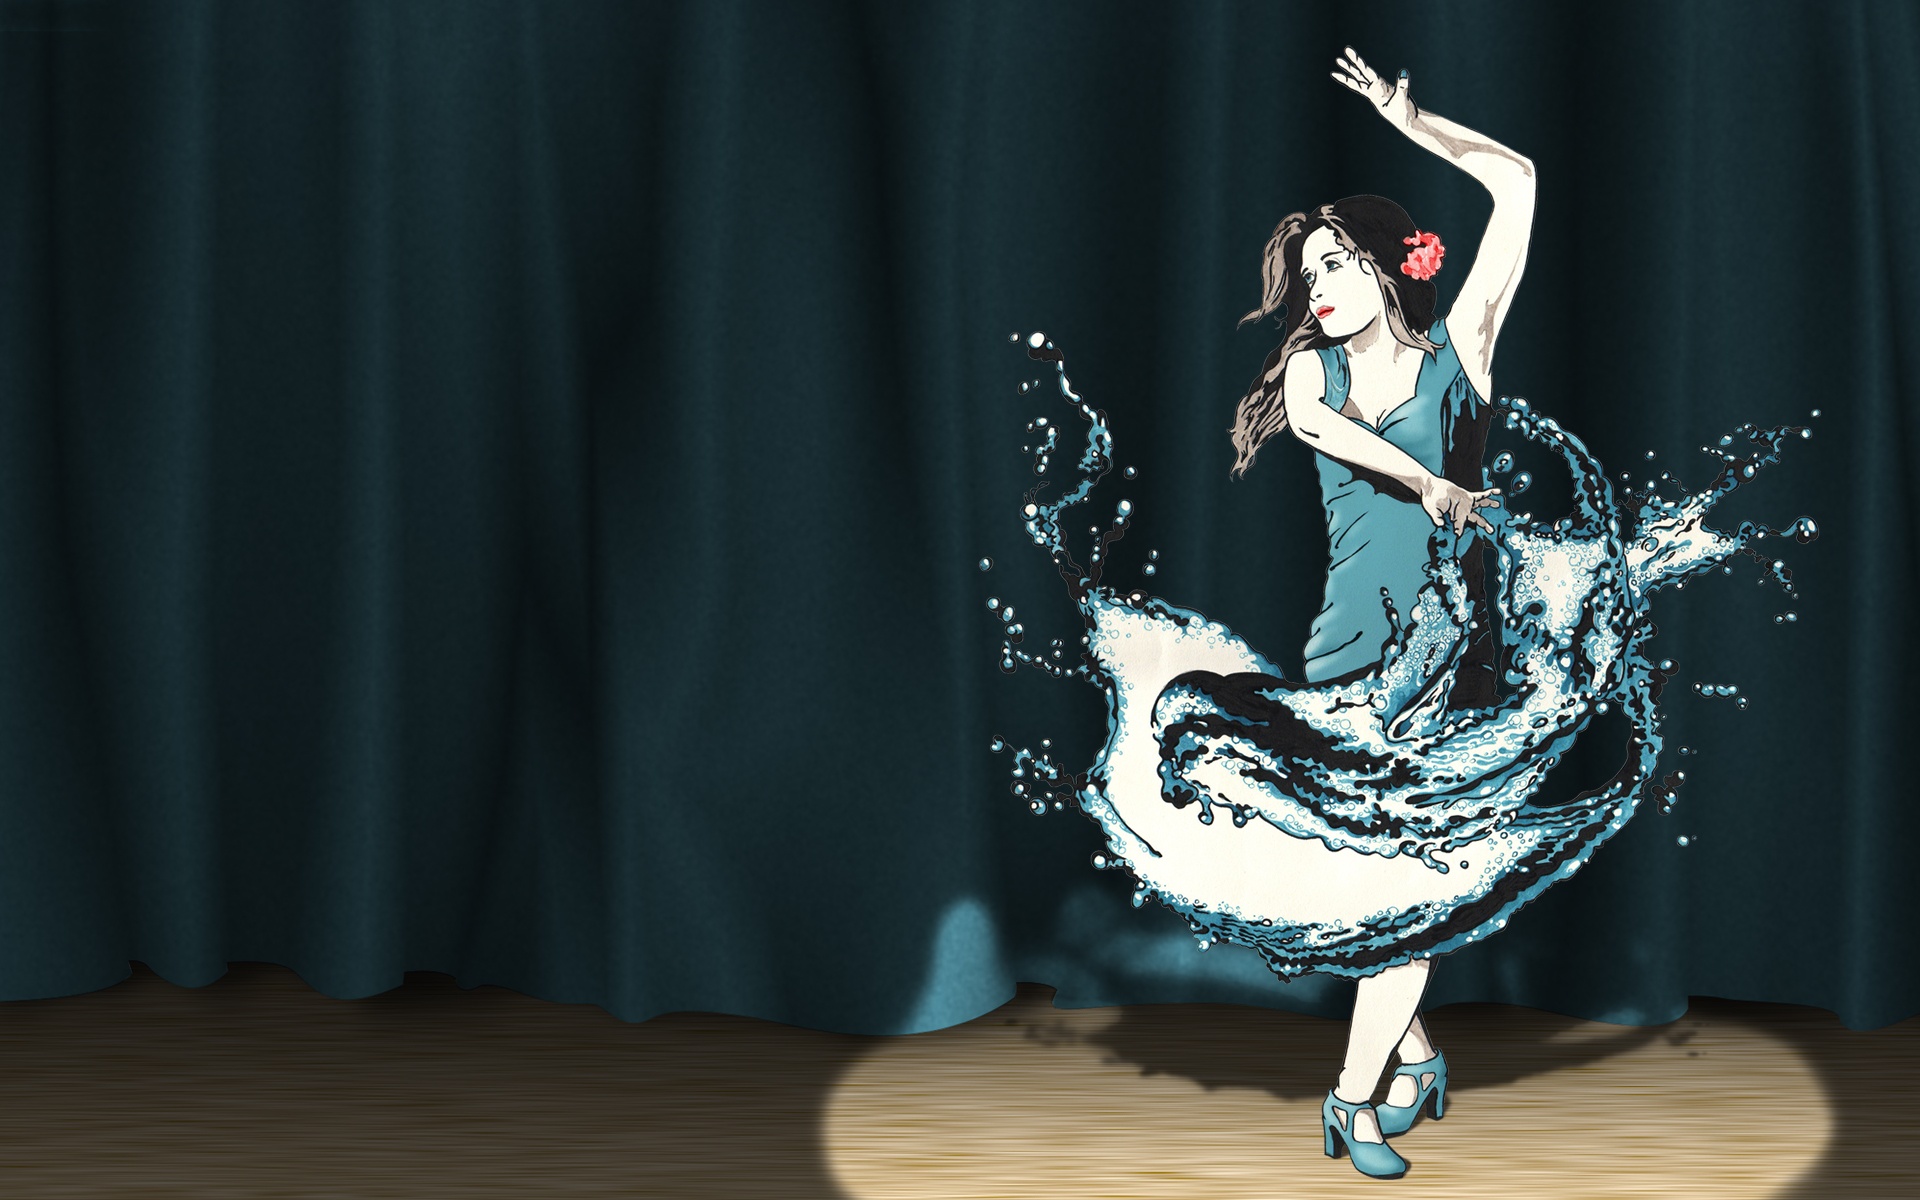 Dance Hd Wallpapers 1080p - 1920x1200 Wallpaper 